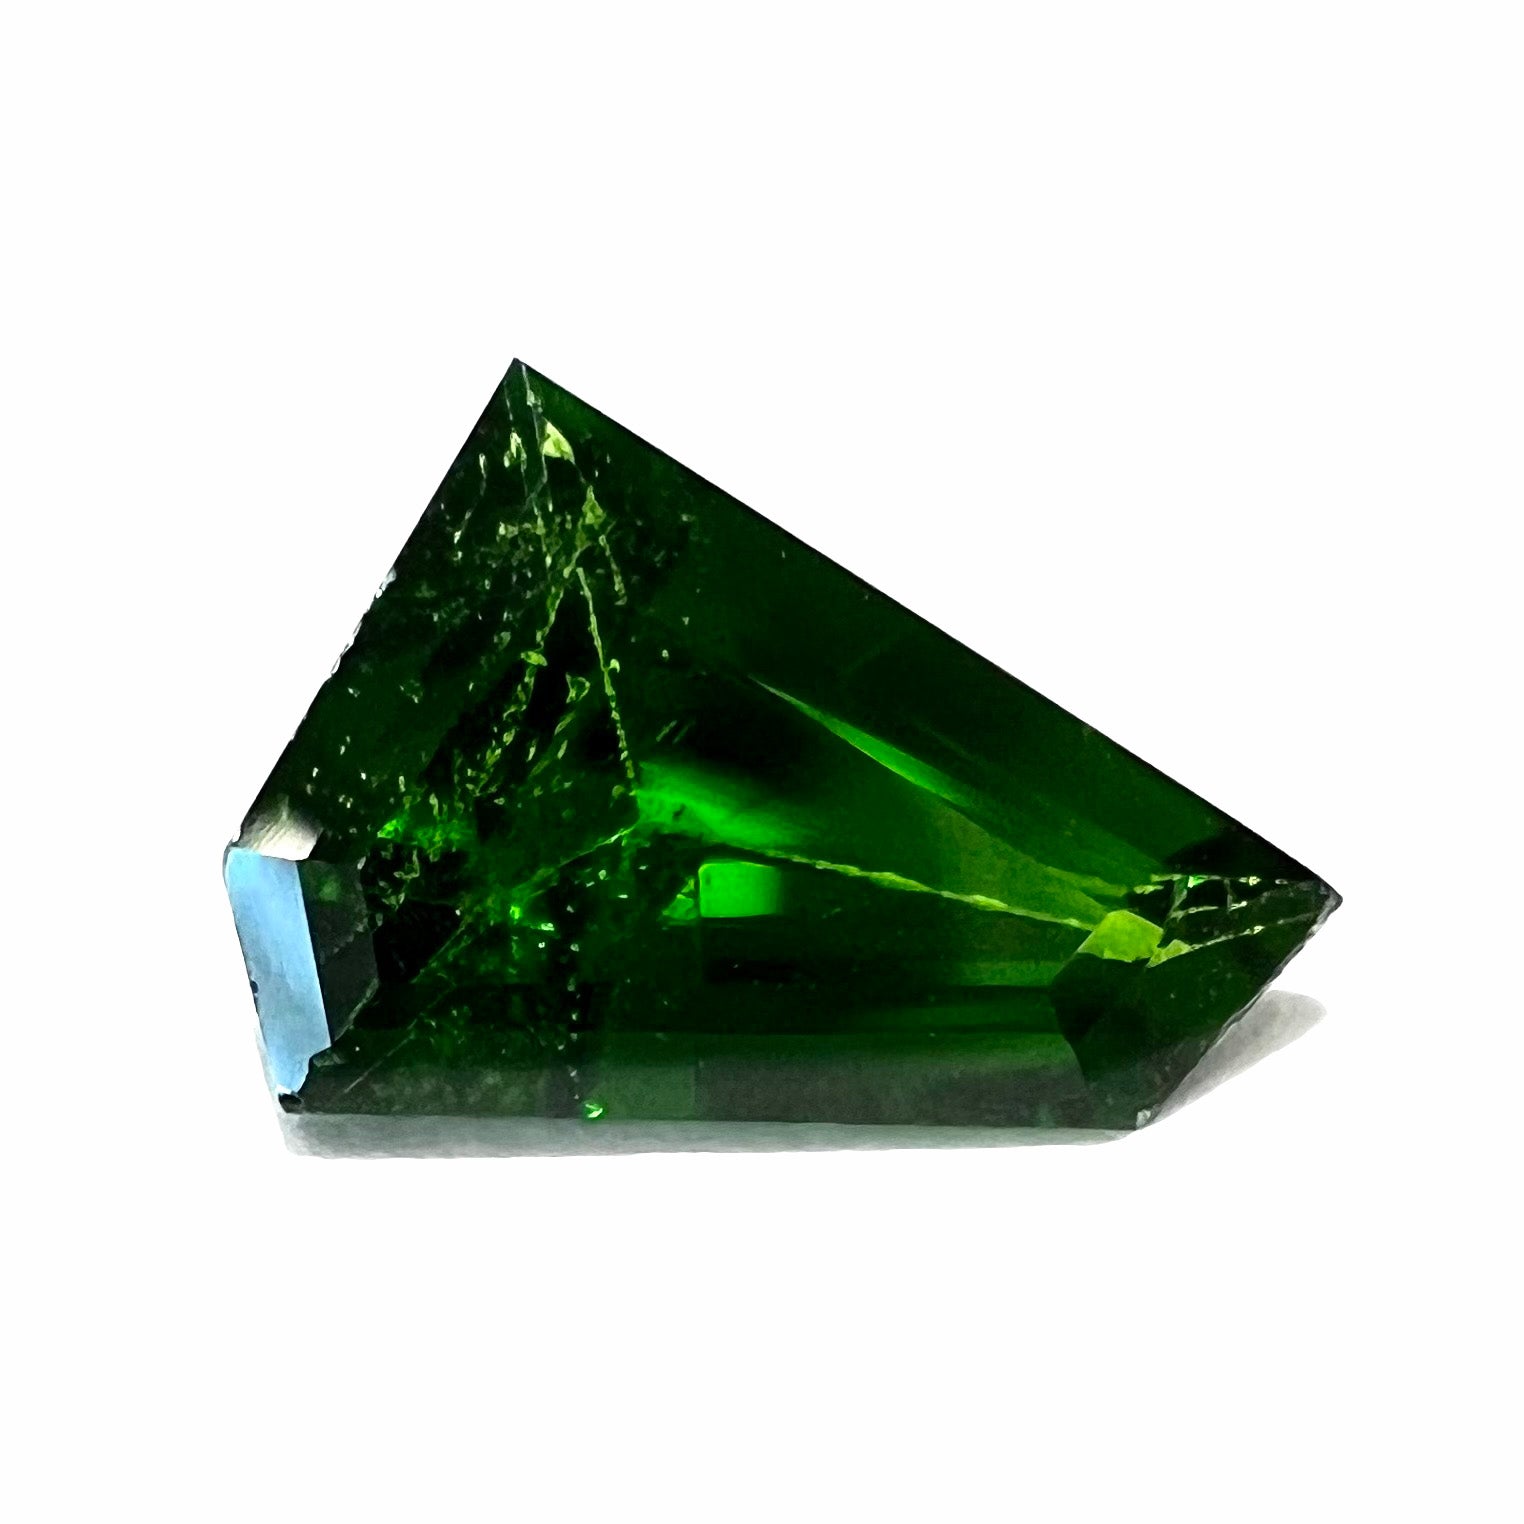 A freeform shield cut chrome diopside gemstone that weighs 1.43 carats.